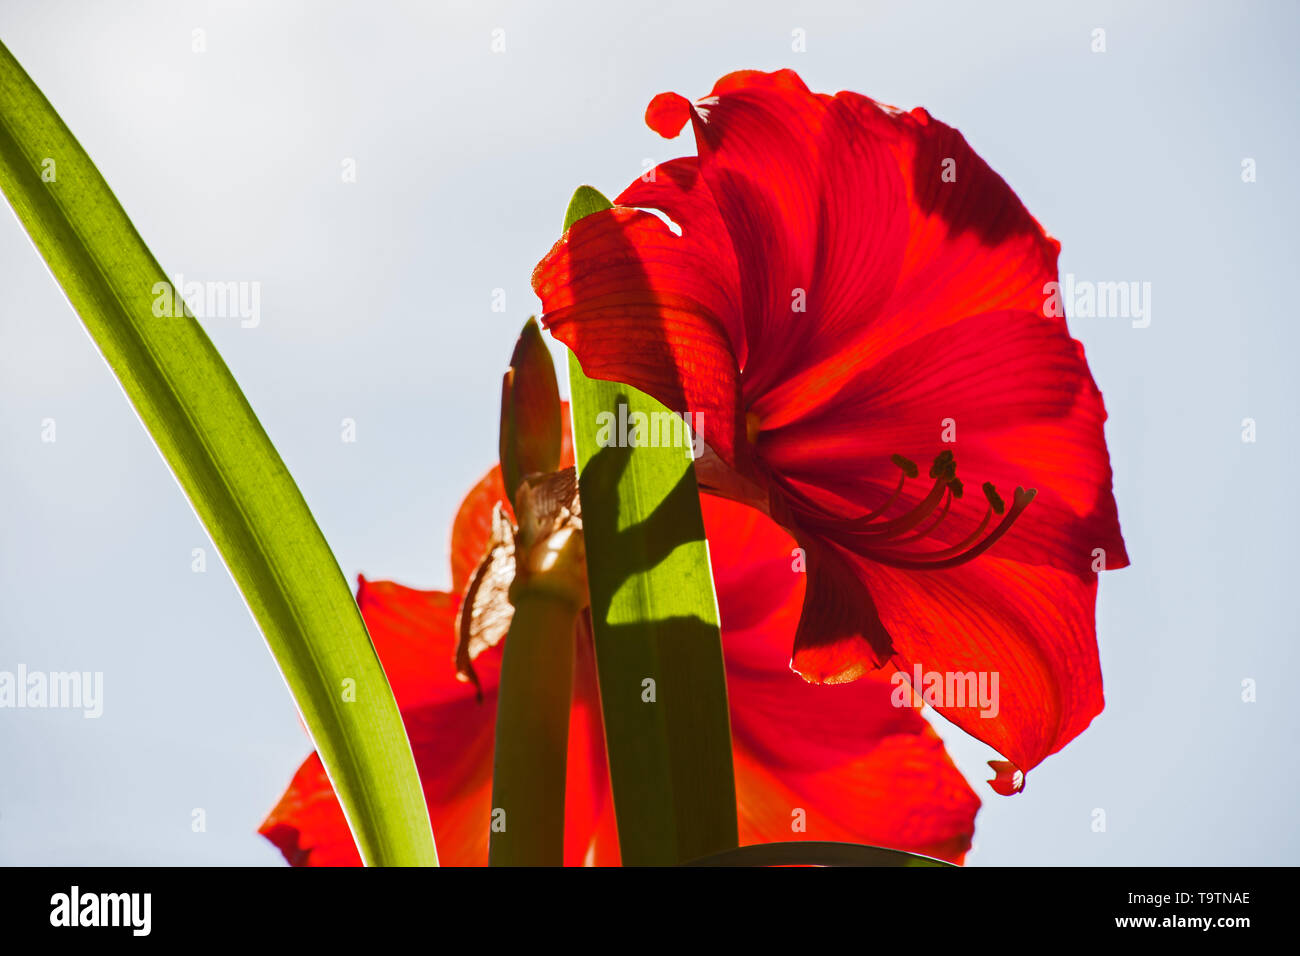 Red Amaryllis flower against blue sky Stock Photo